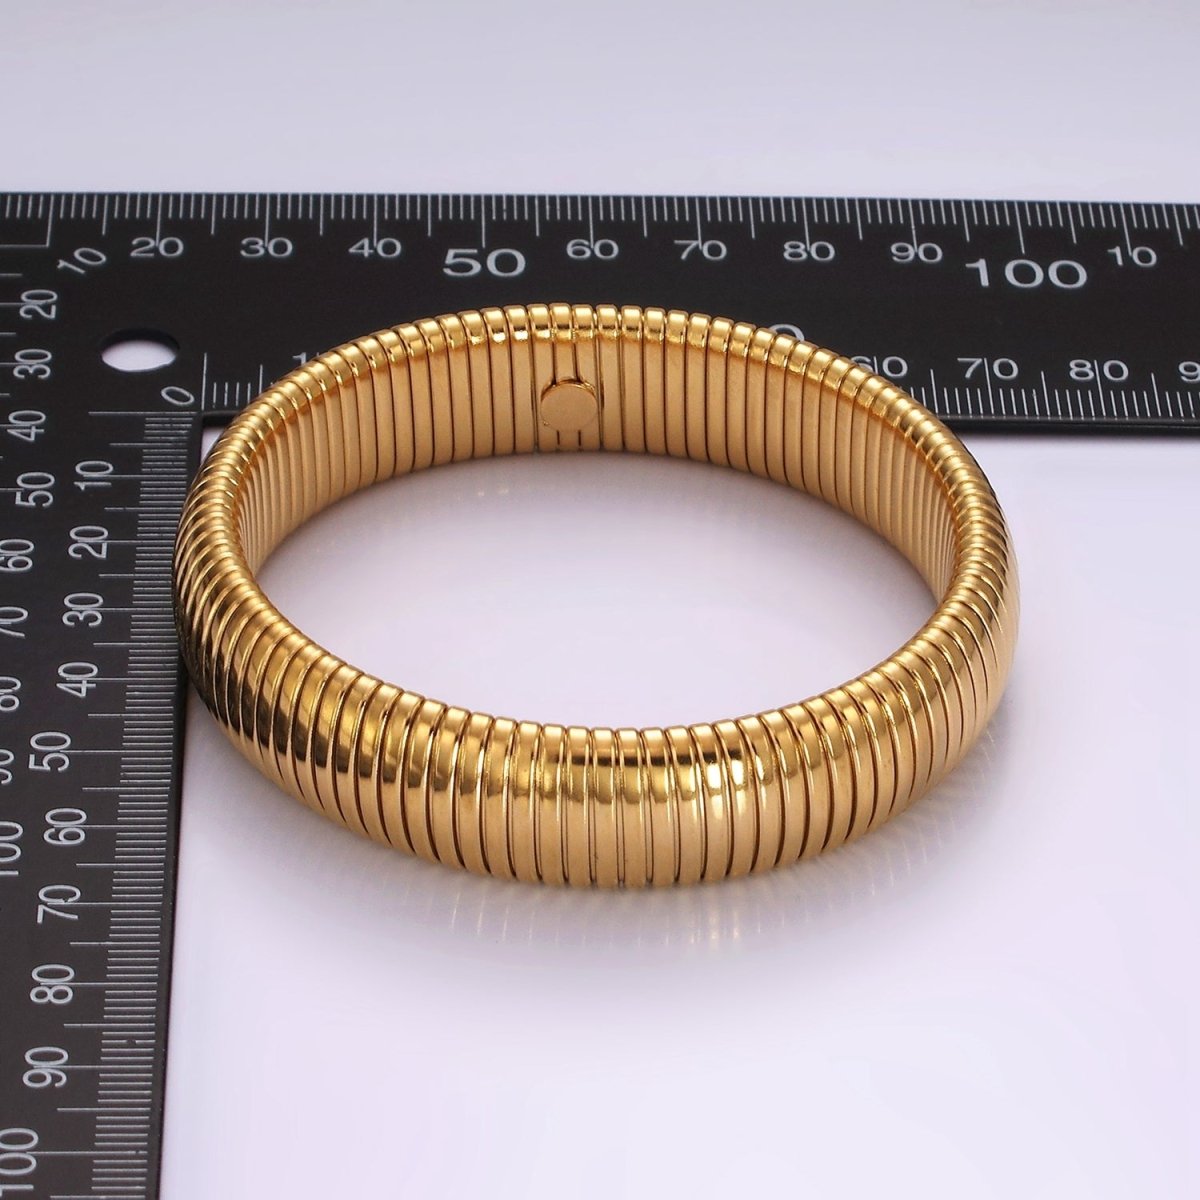 Stainless Steel 11.8mm, 14.8mm Flexible Snake 70mm Bangle Bracelet in Gold & Silver | WA-2325 - WA-2328 - DLUXCA